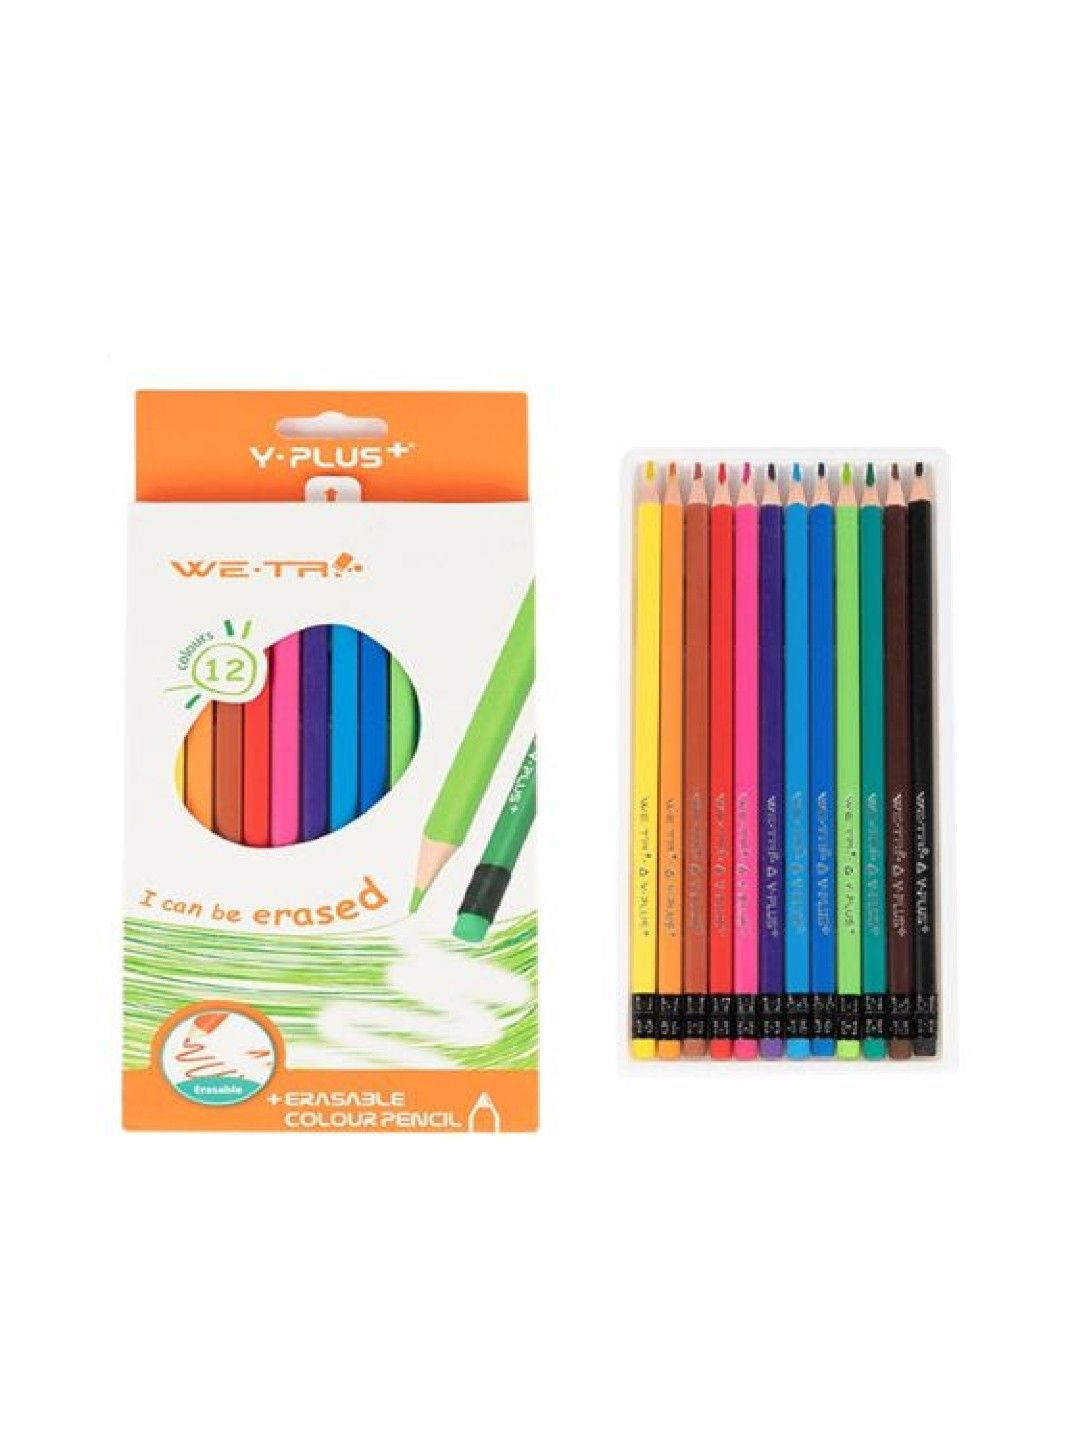 Y-PLUS+ WE-TRI Erasable Color Pencils (12 Colors)